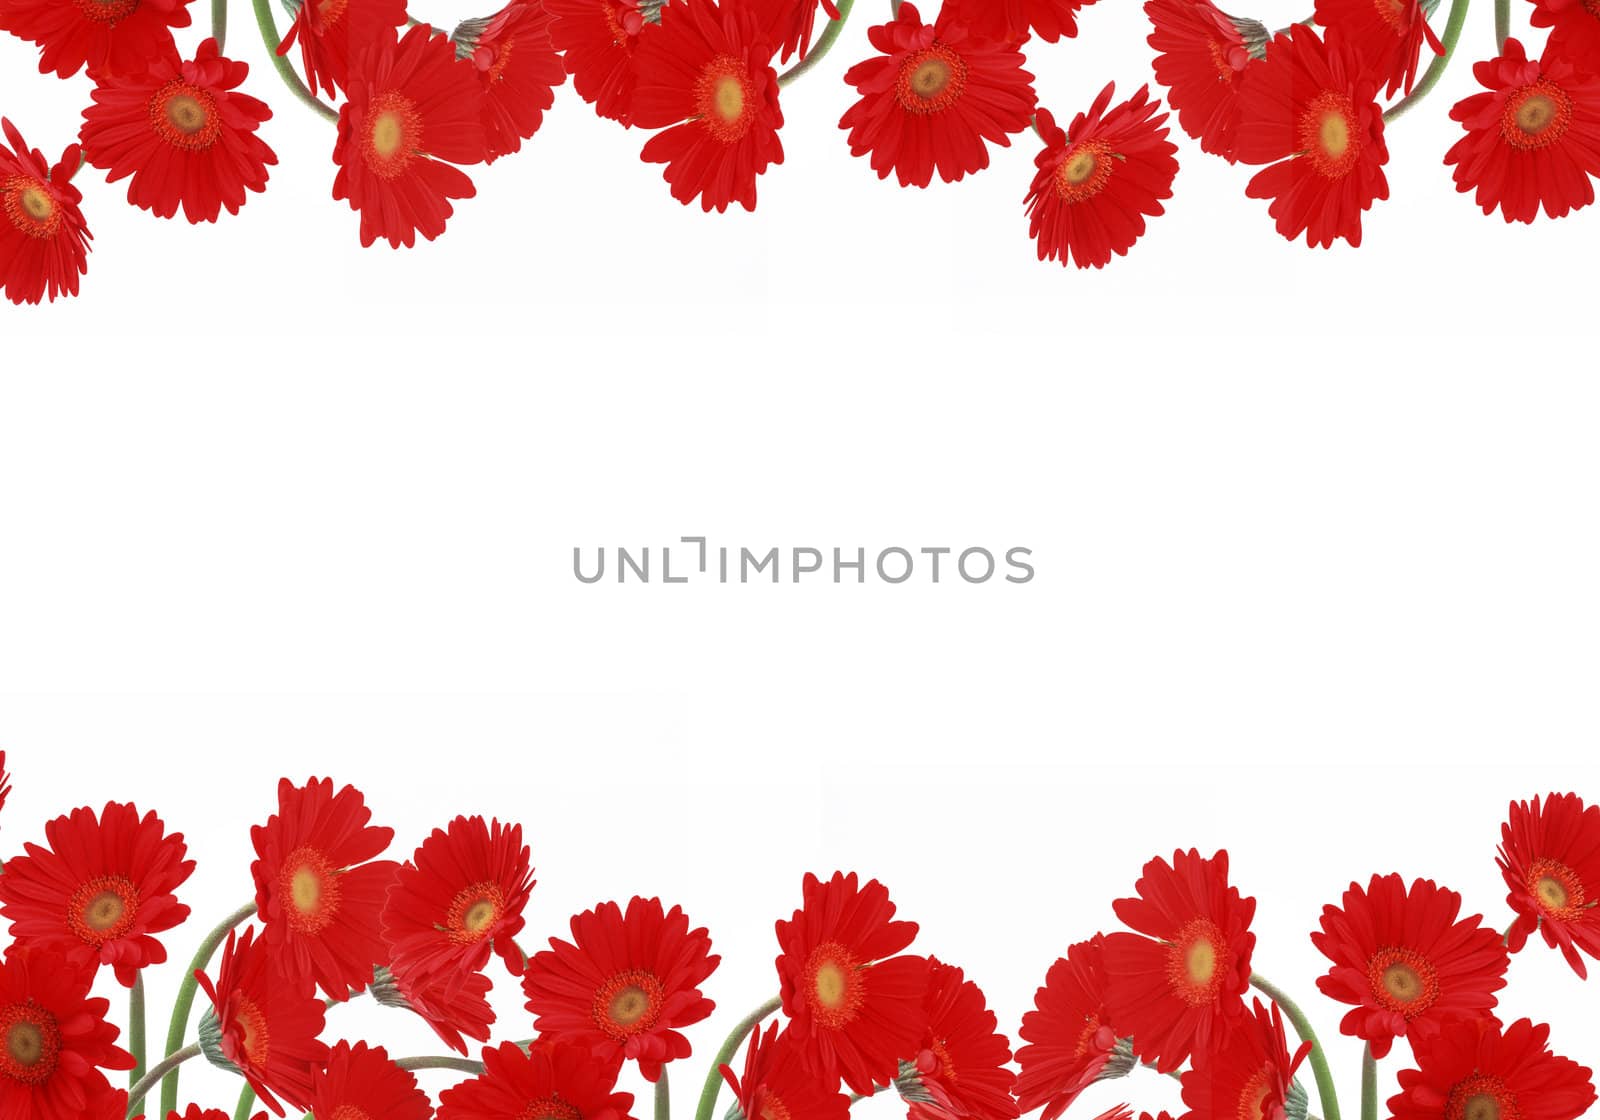 red daisies on white background by paddythegolfer